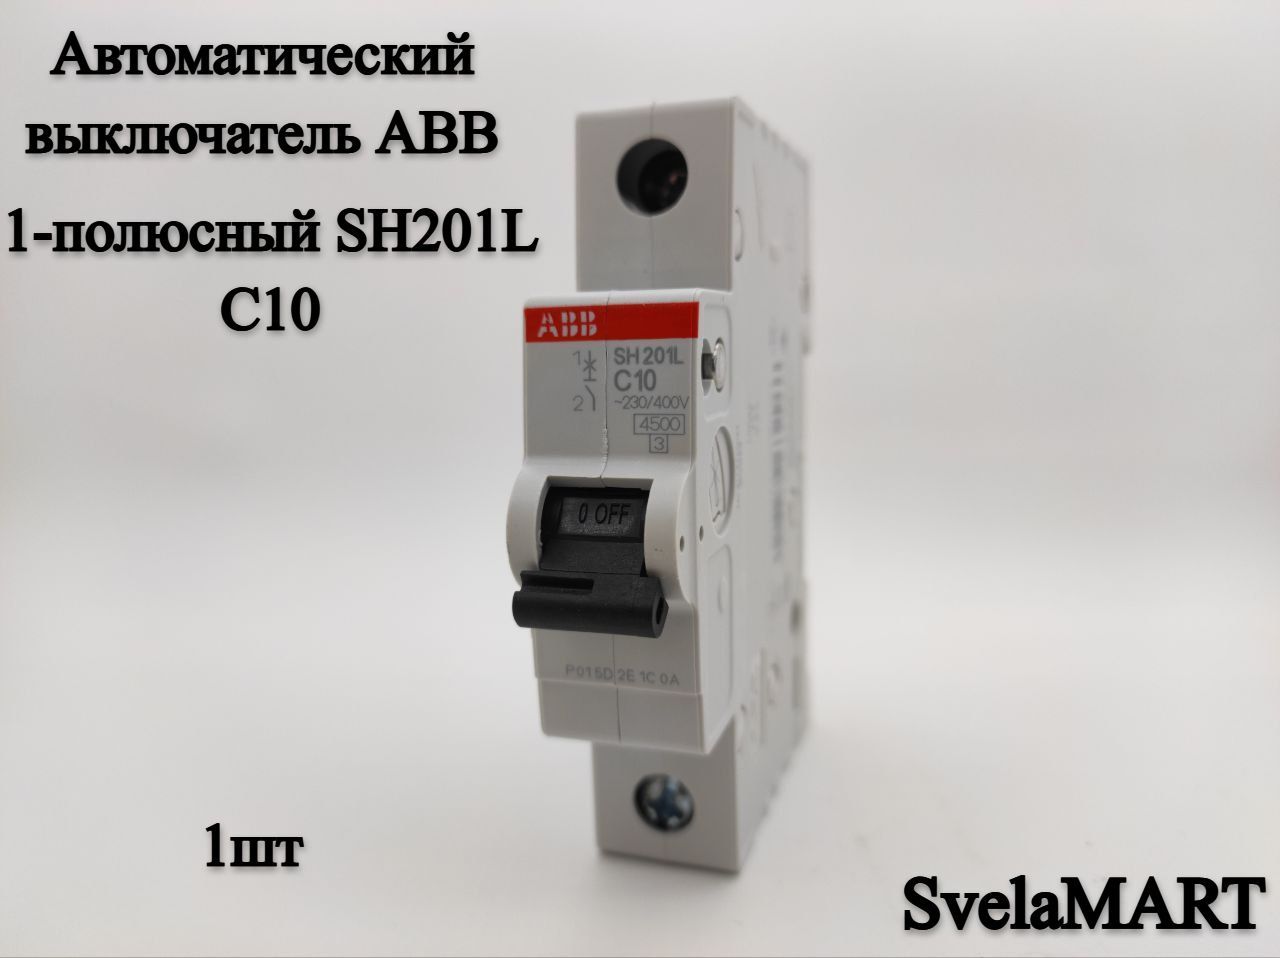 Автоматический выключатель sh201. ABB sh201. Автоматический выключатель 1-полюсный s201m c50. Автомат 1р 25a sh201l с (АВВ). ABB 1-полюсный s201 c6.